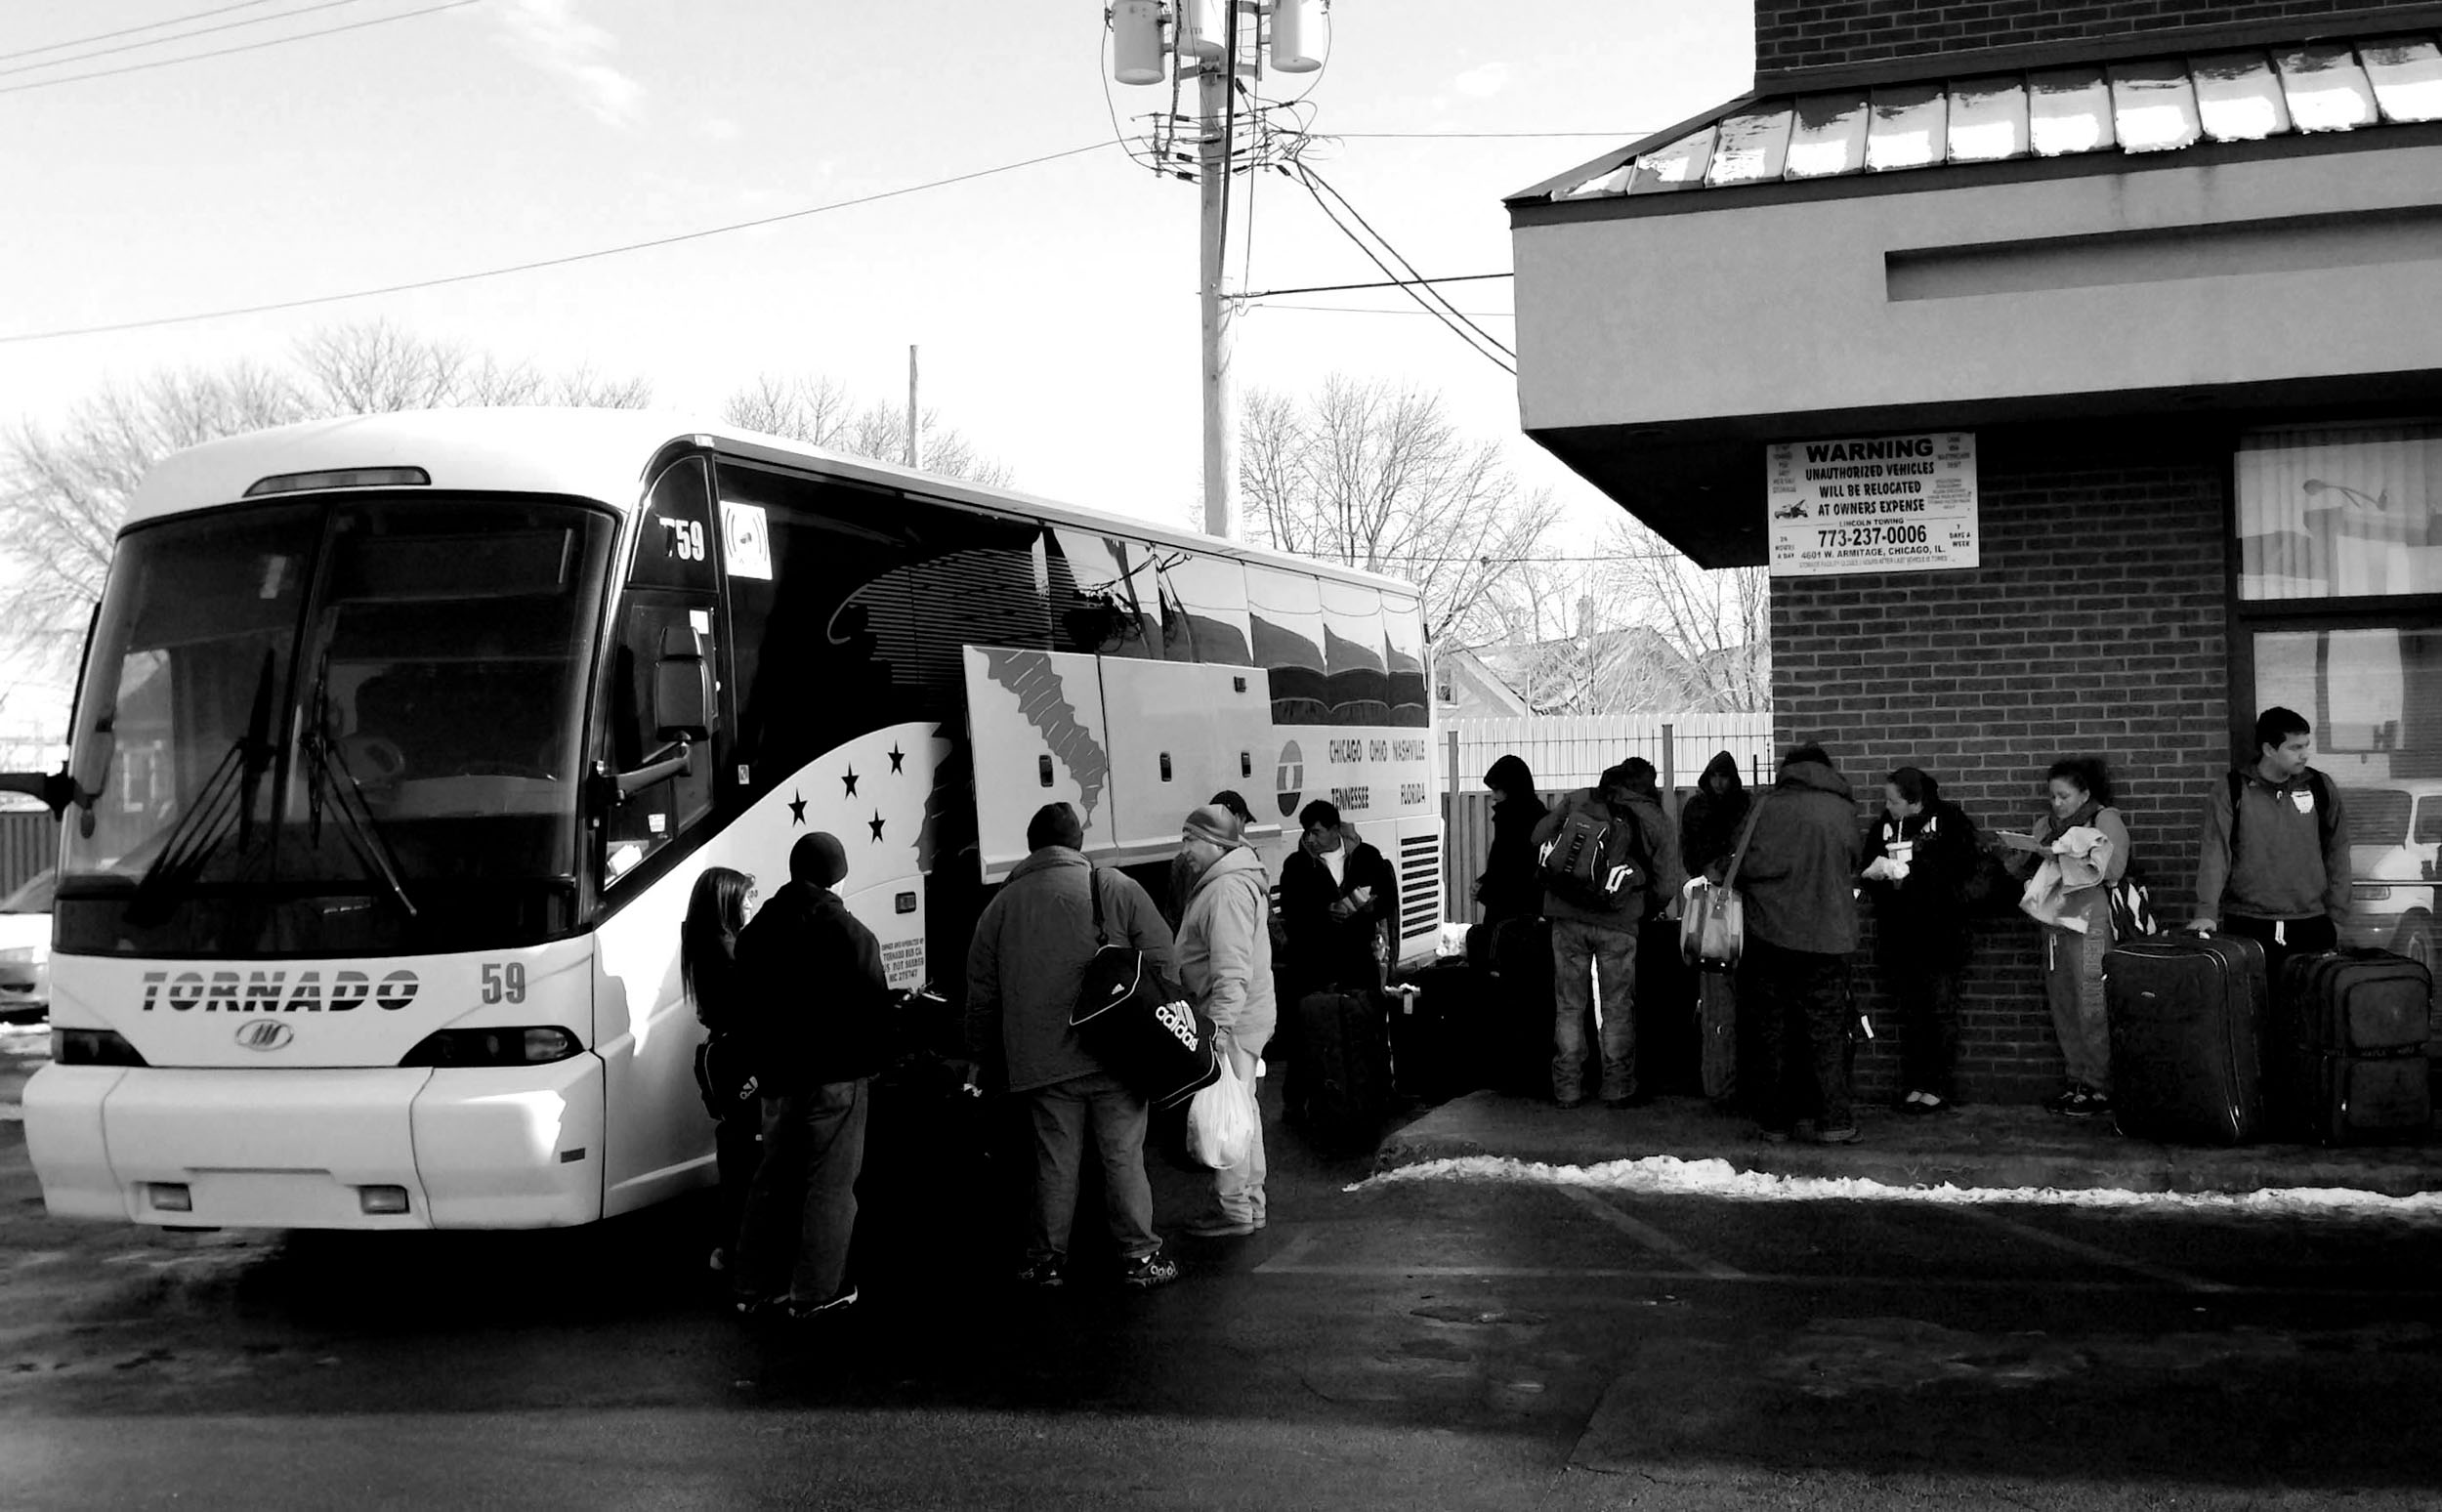 01-mexico-holiday-bus-ride-web.JPG